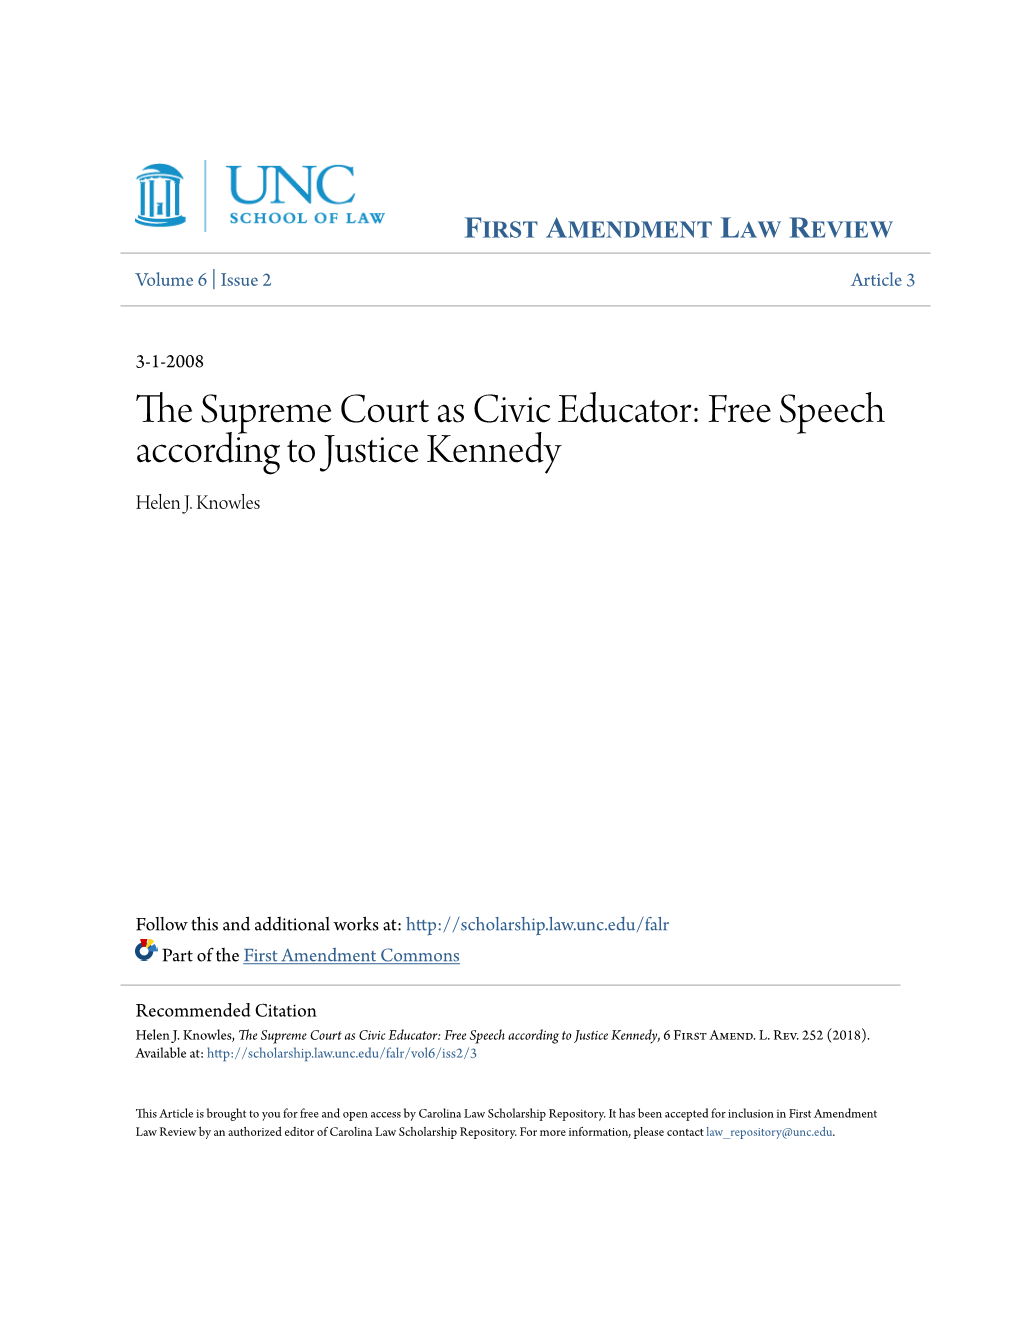 Free Speech According to Justice Kennedy Helen J